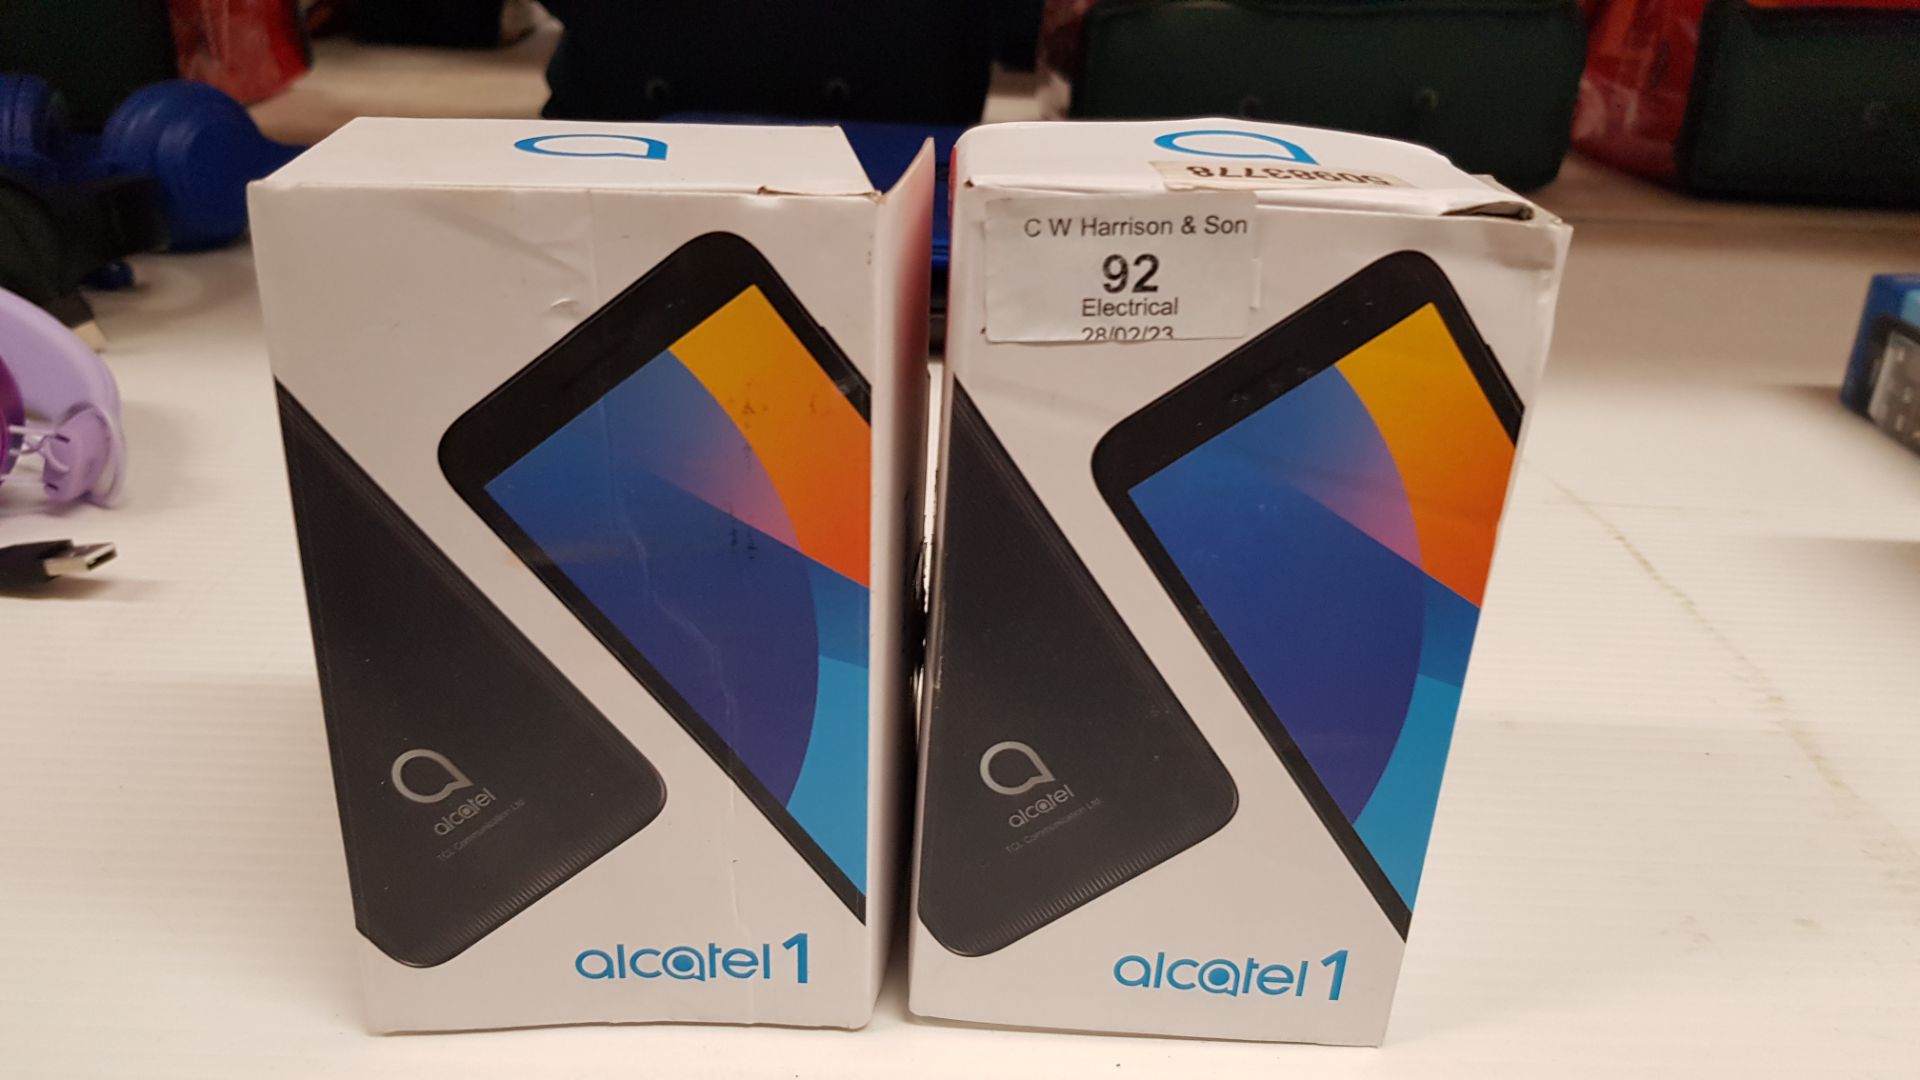 2x Alcatel 1 Smartphone. RRP £60 Each (1x Blue, 1x Black). (Saleroom Location: Upstairs AA05). - Image 2 of 8